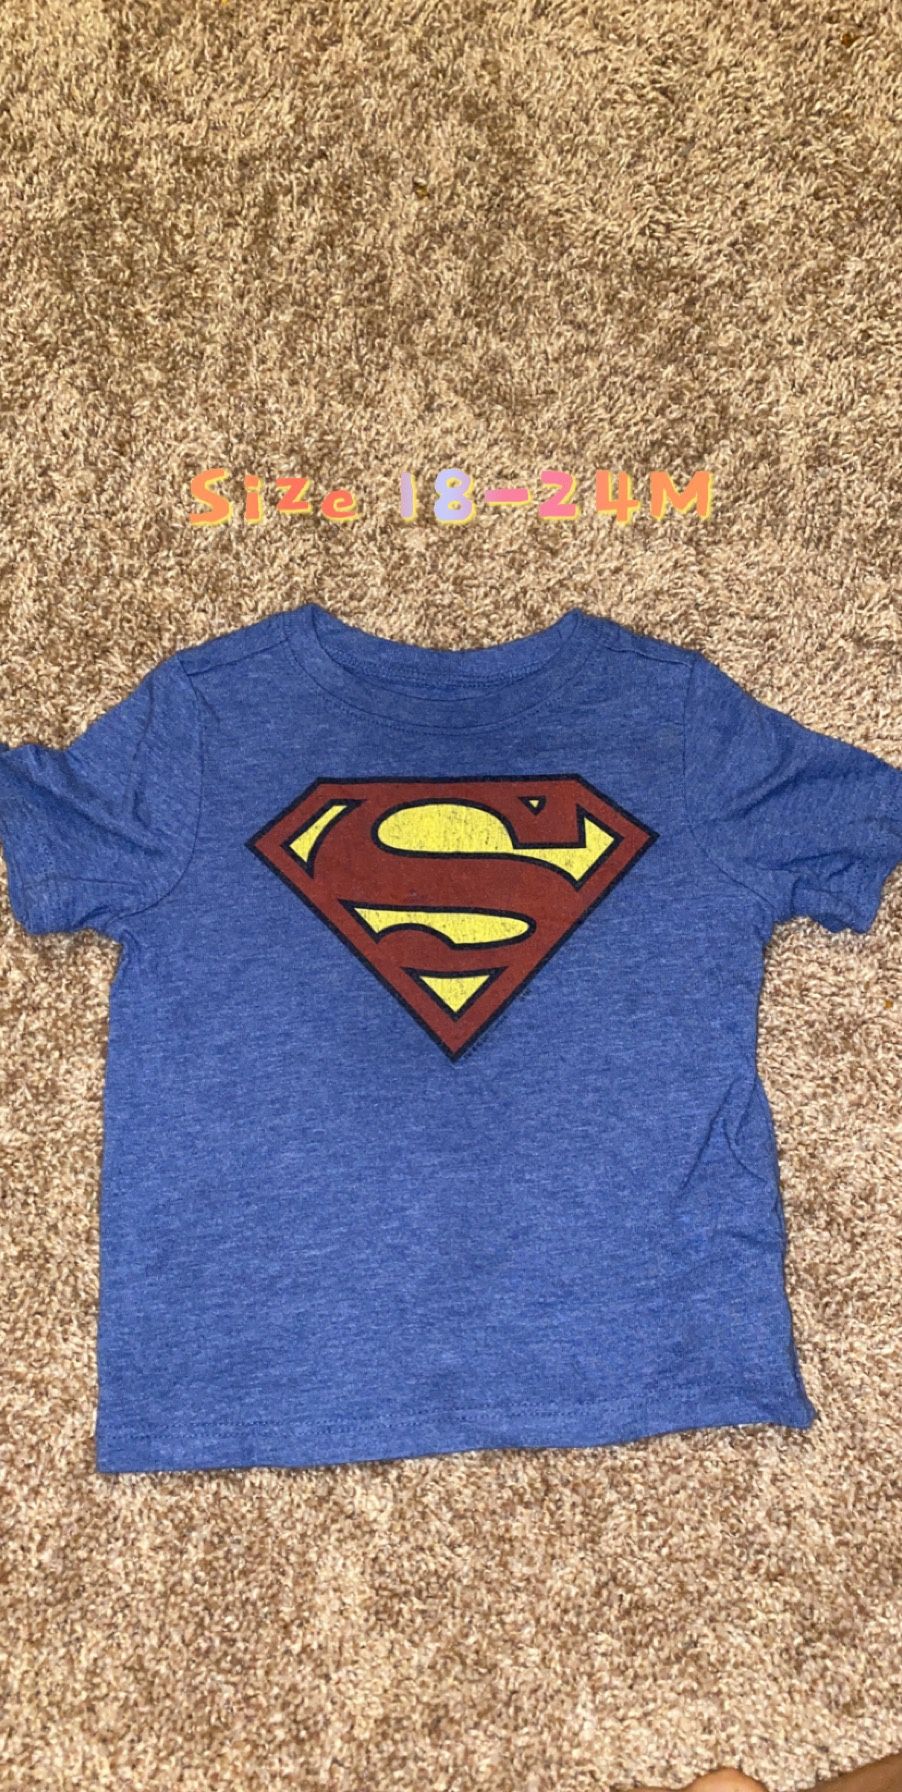 Toddler Superman tshirt